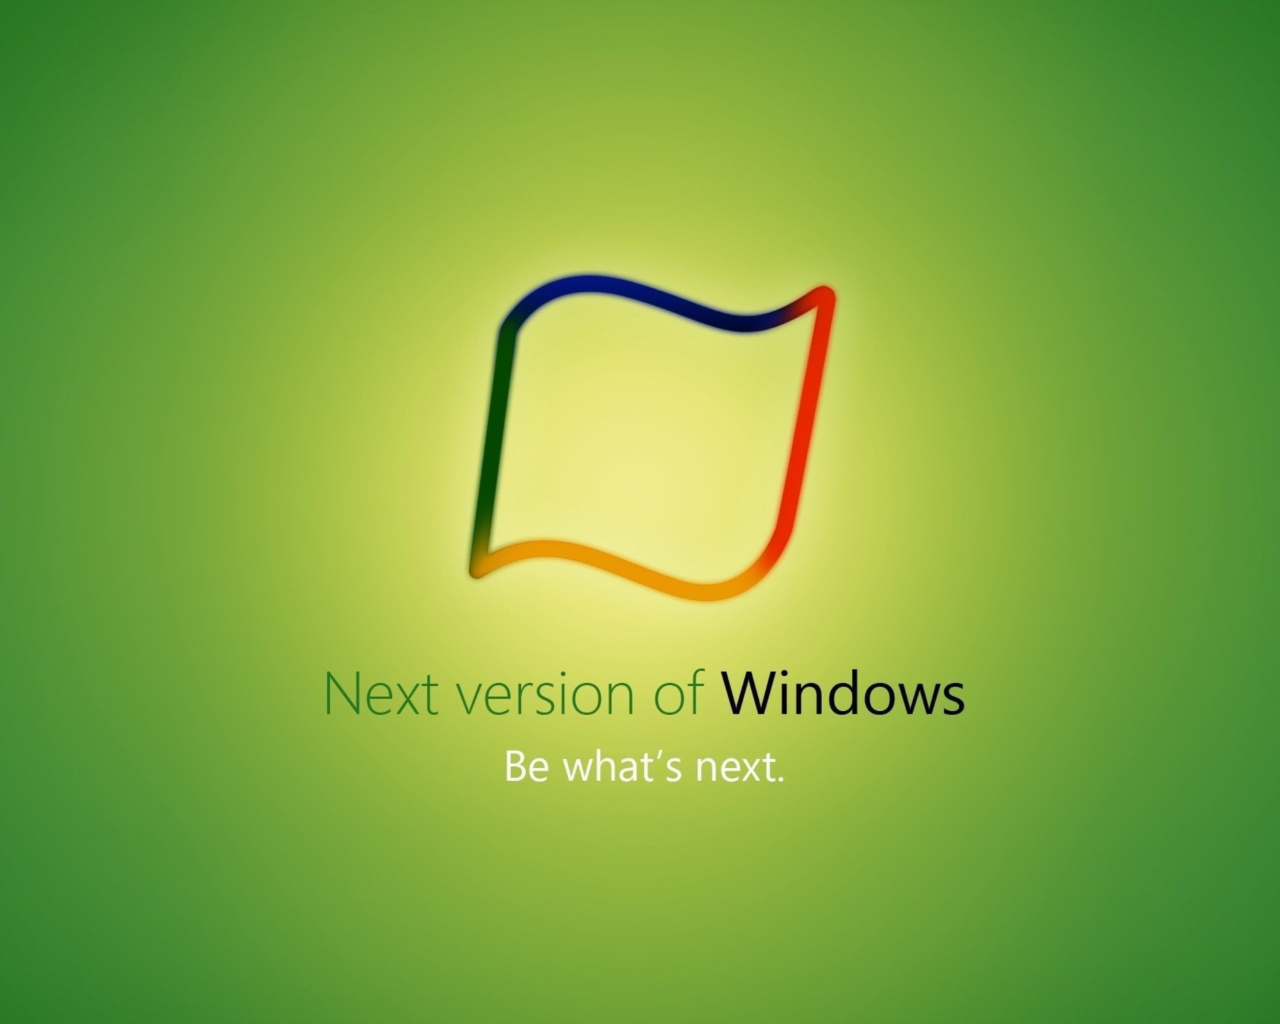 Das Windows 8 Green Edition Wallpaper 1280x1024